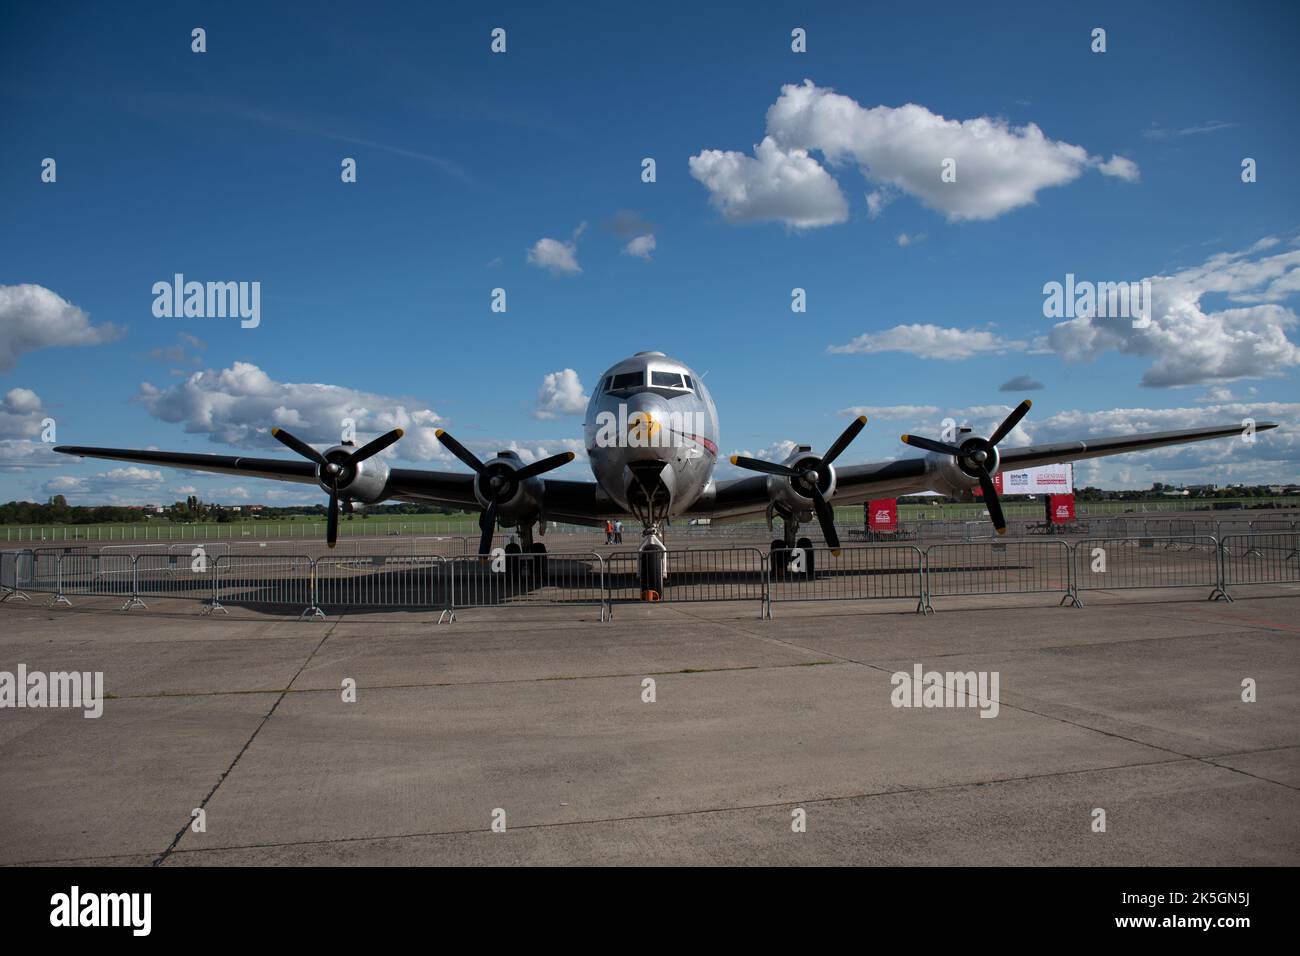 Douglas C-54 Skymaster troop carrier aeroplane at Berlin Tempelhof Airport Stock Photo